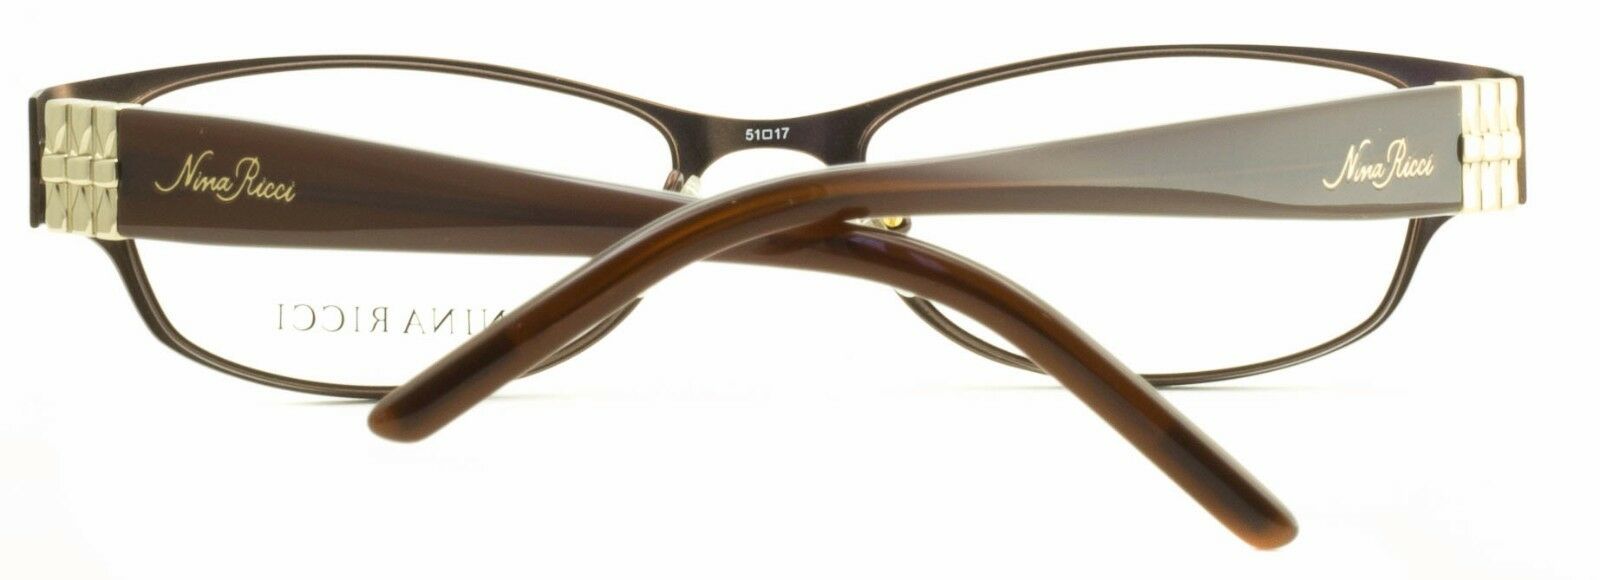 NINA RICCI NR2282 C02 Eyewear FRAMES RX Optical Eyeglasses Glasses New - BNIB